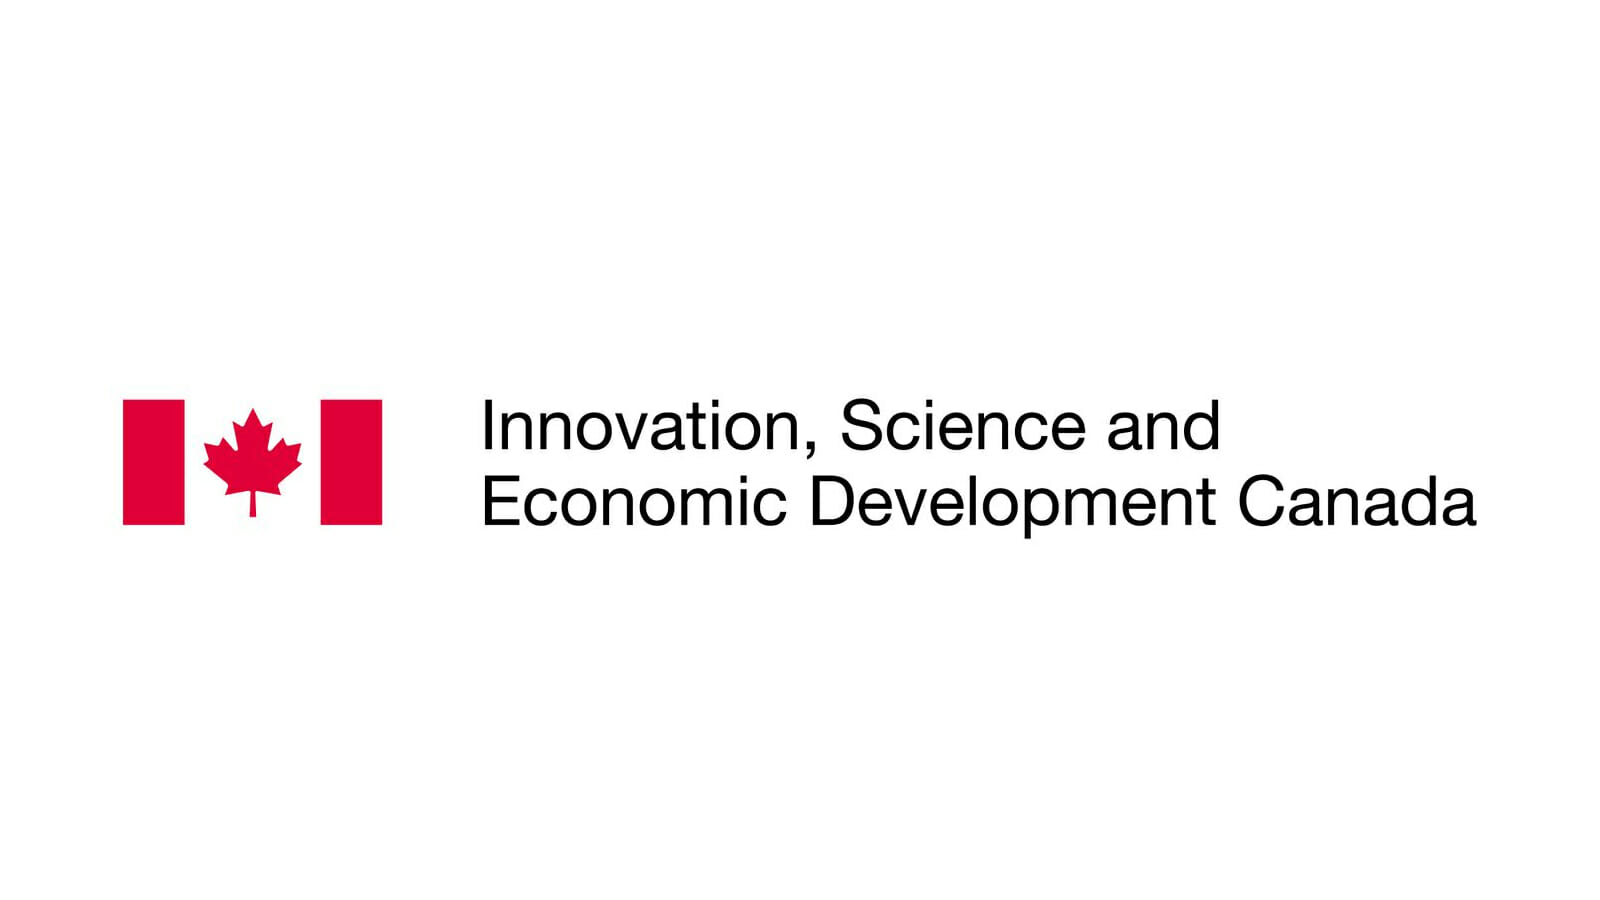 Innovation, Science and Economic Development Canada logo